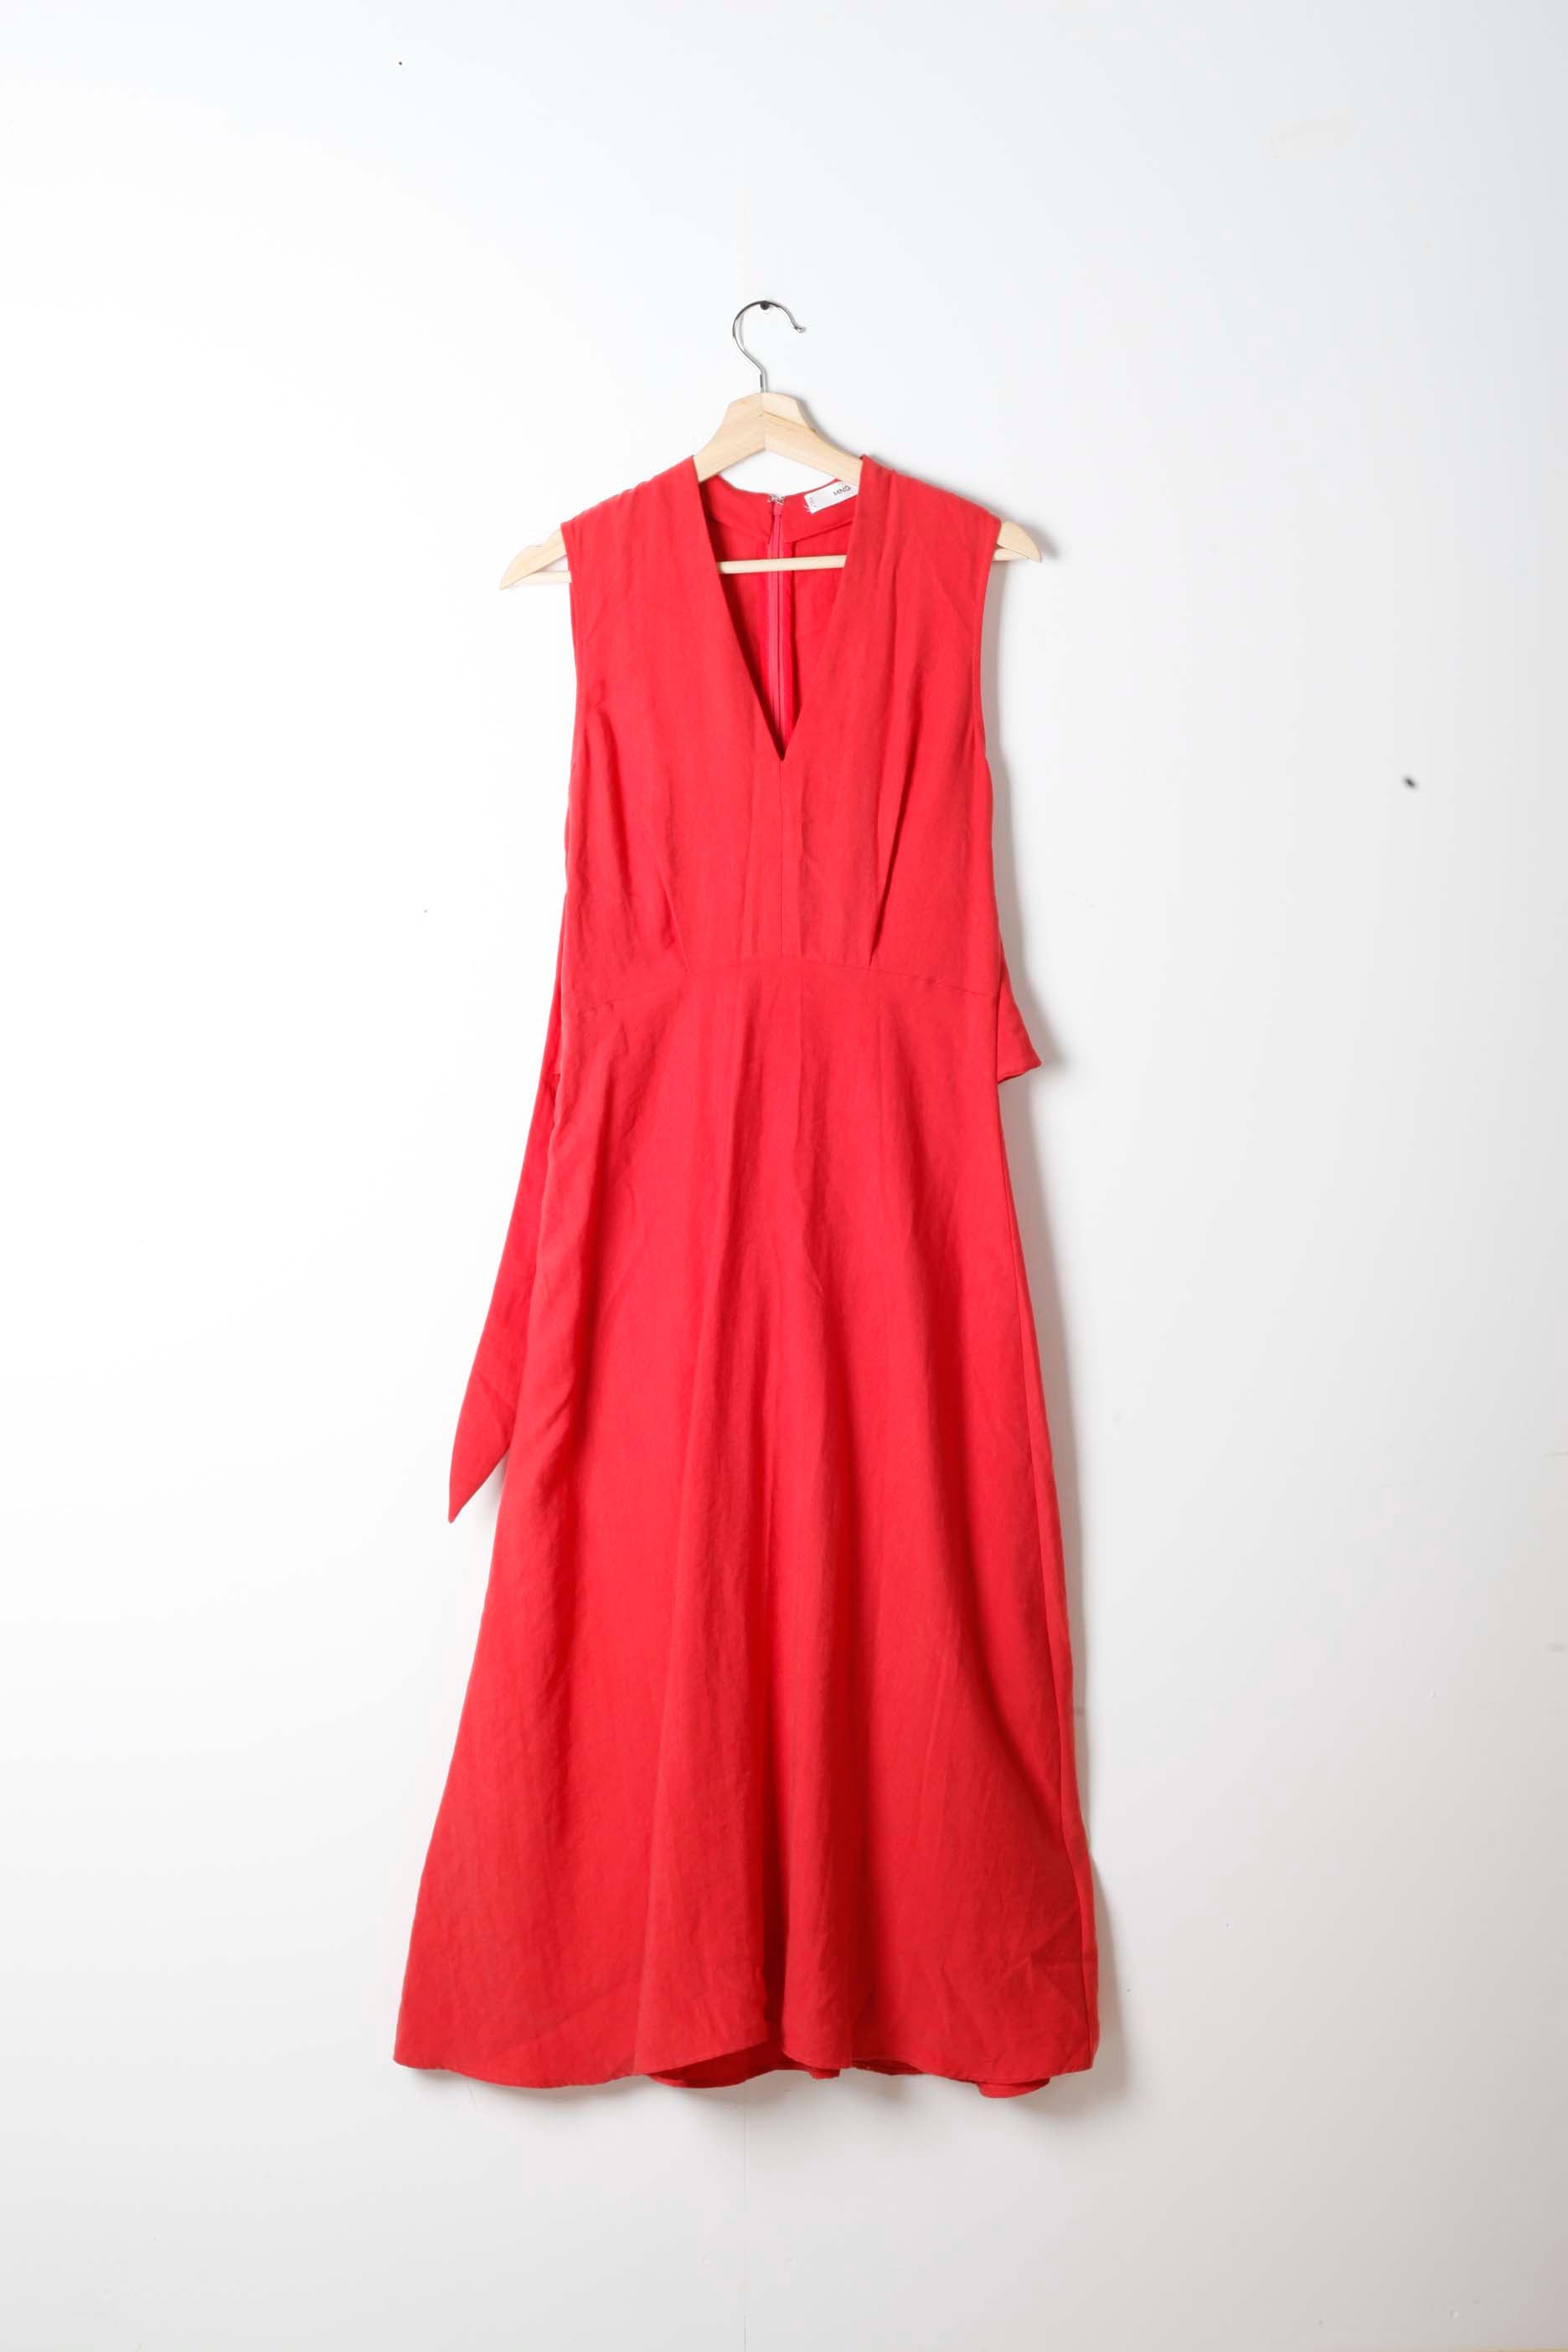 Red Sleeveless Summer Dress with Tie-Waist (Medium)